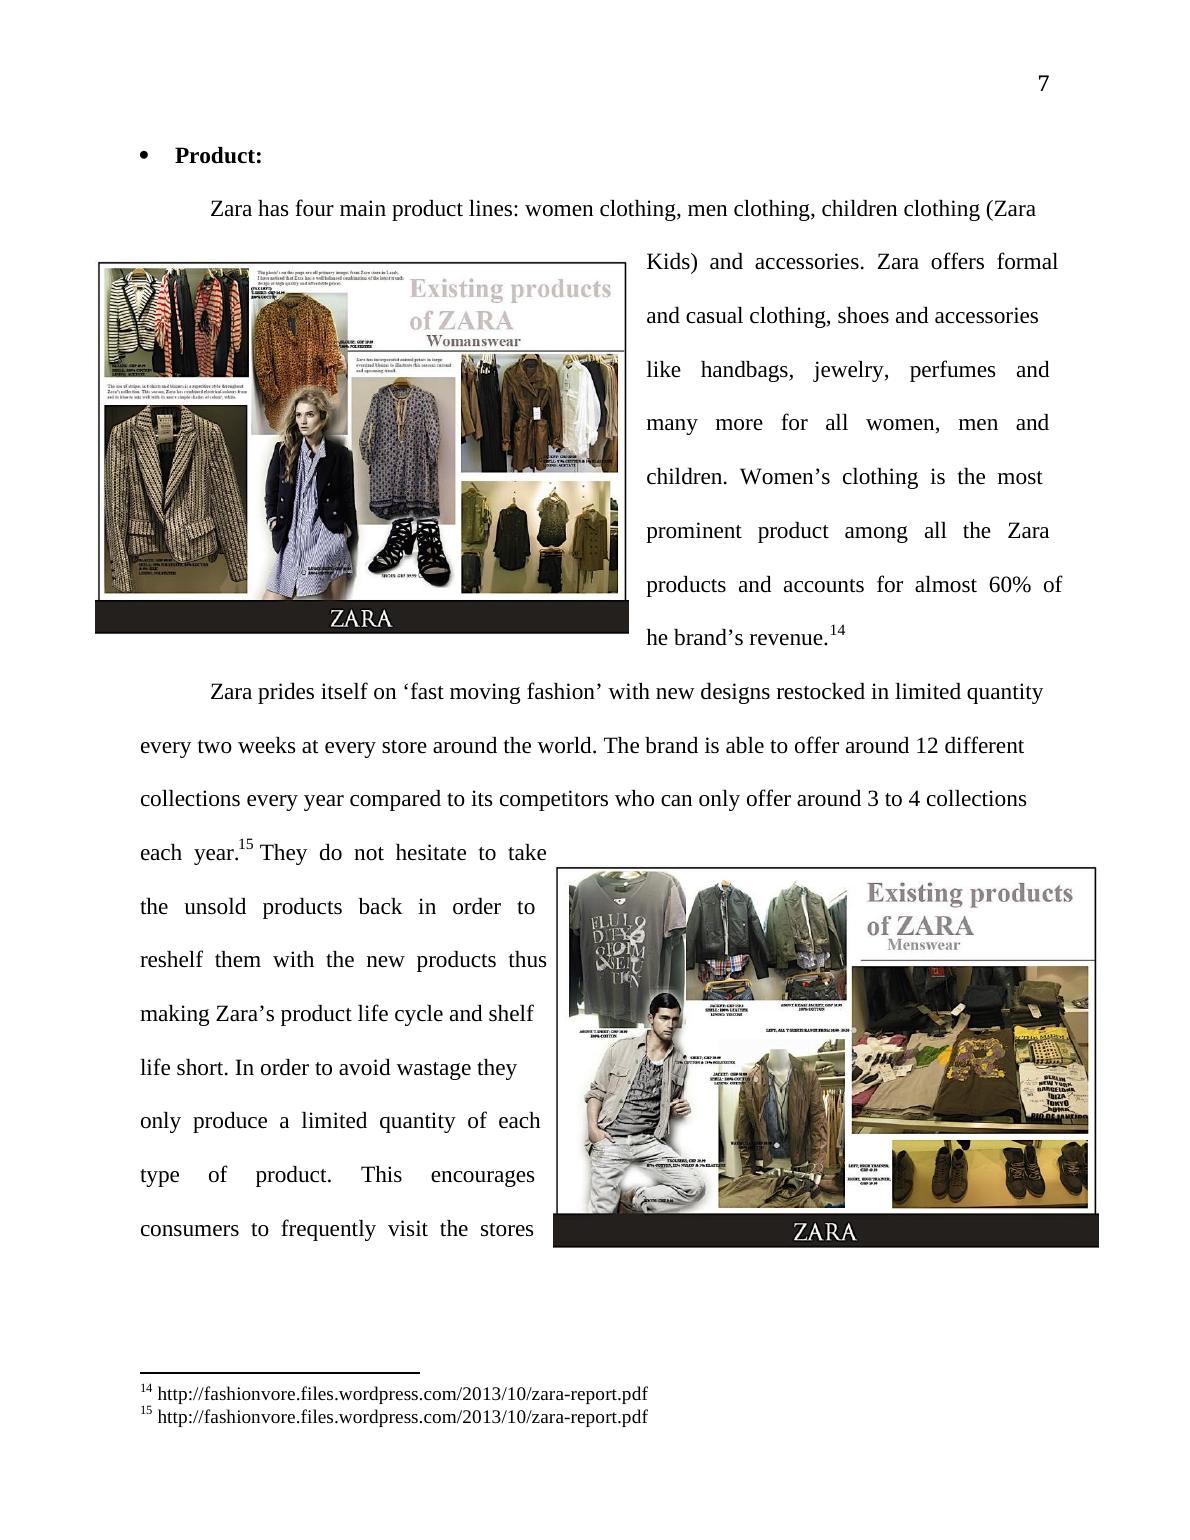 Brand Inventory Company in Zara PDF_7